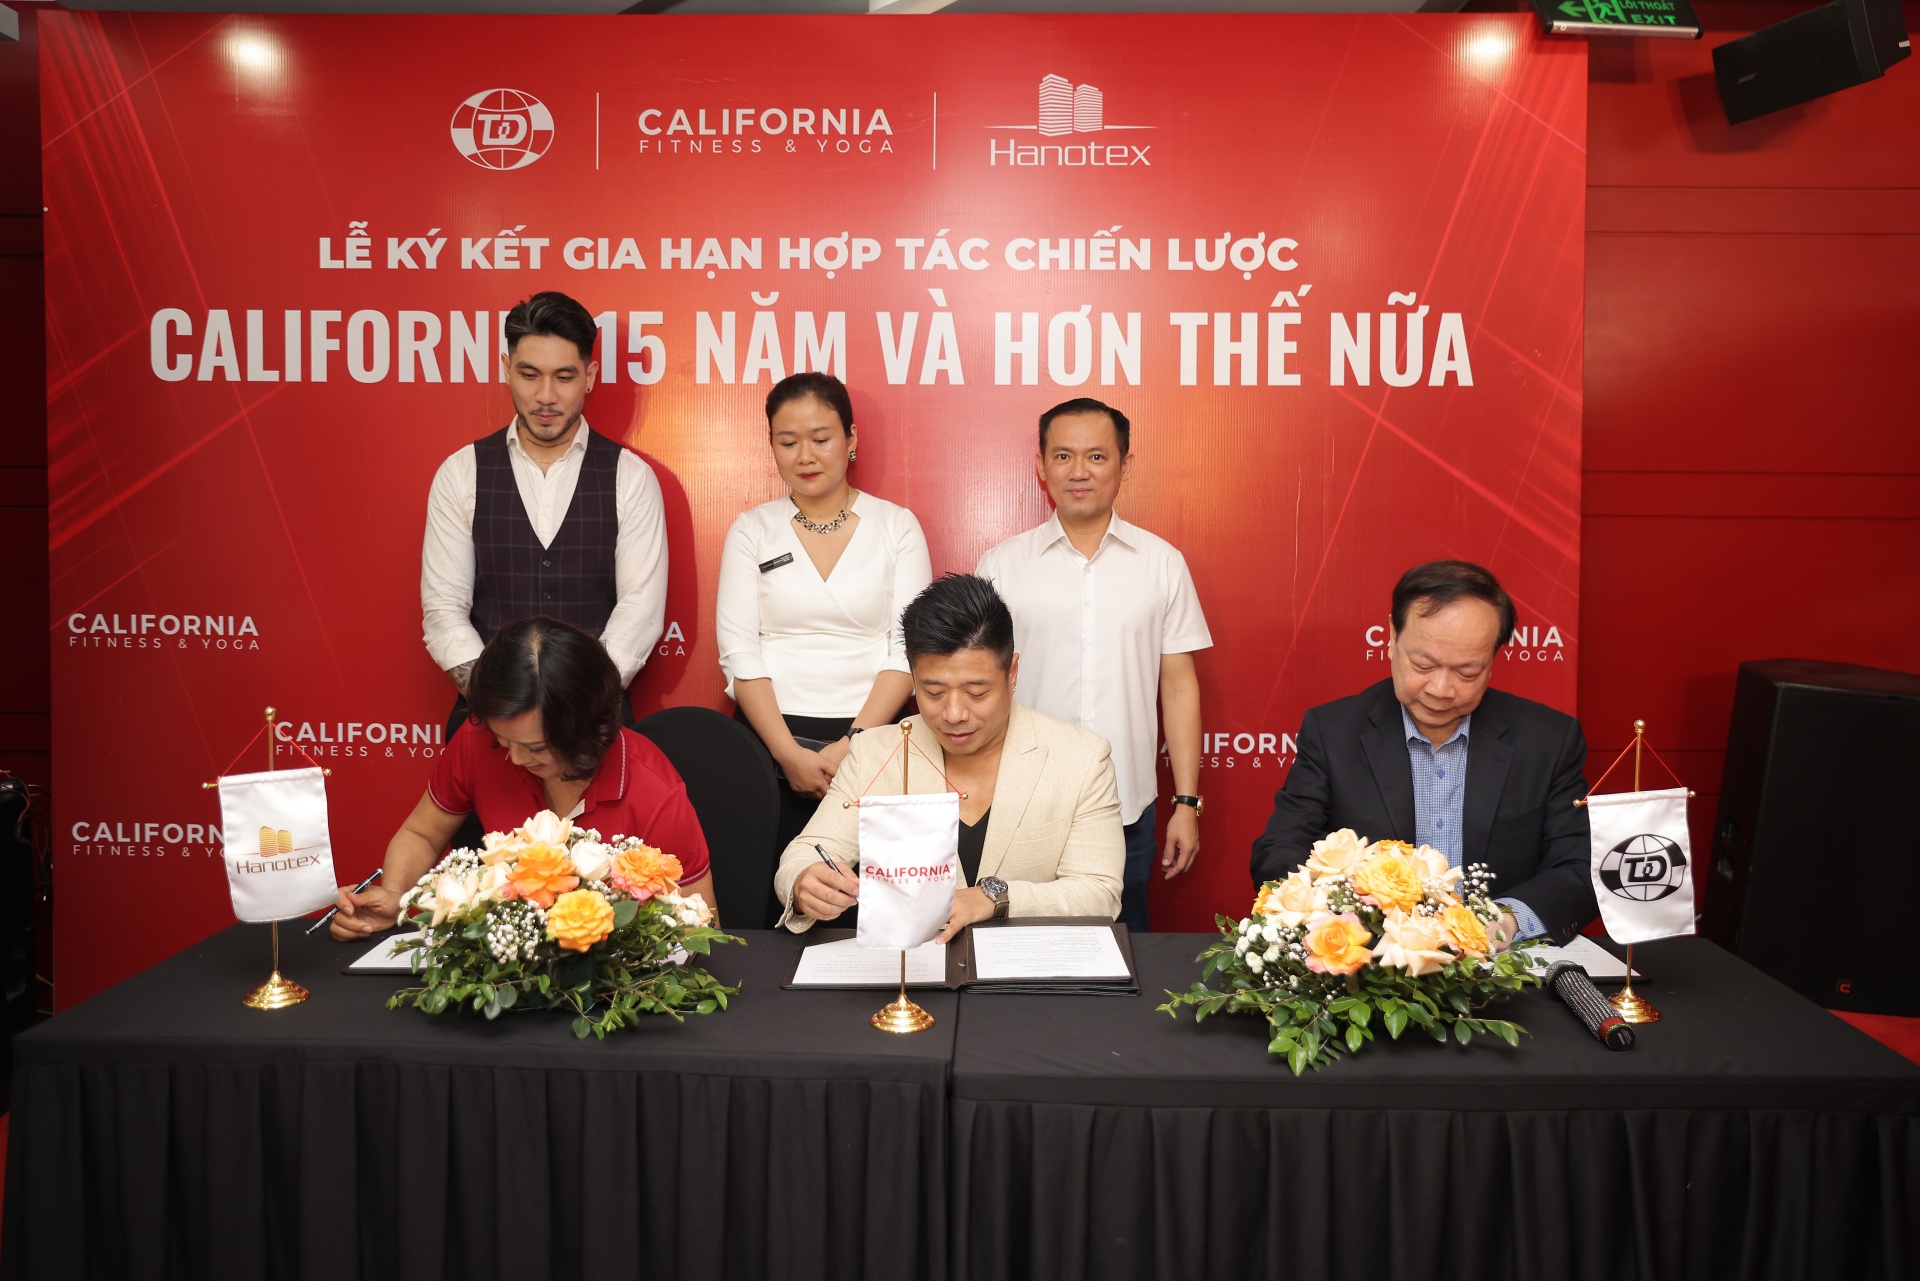 California Fitness spends $25 million on Vietnam market operations